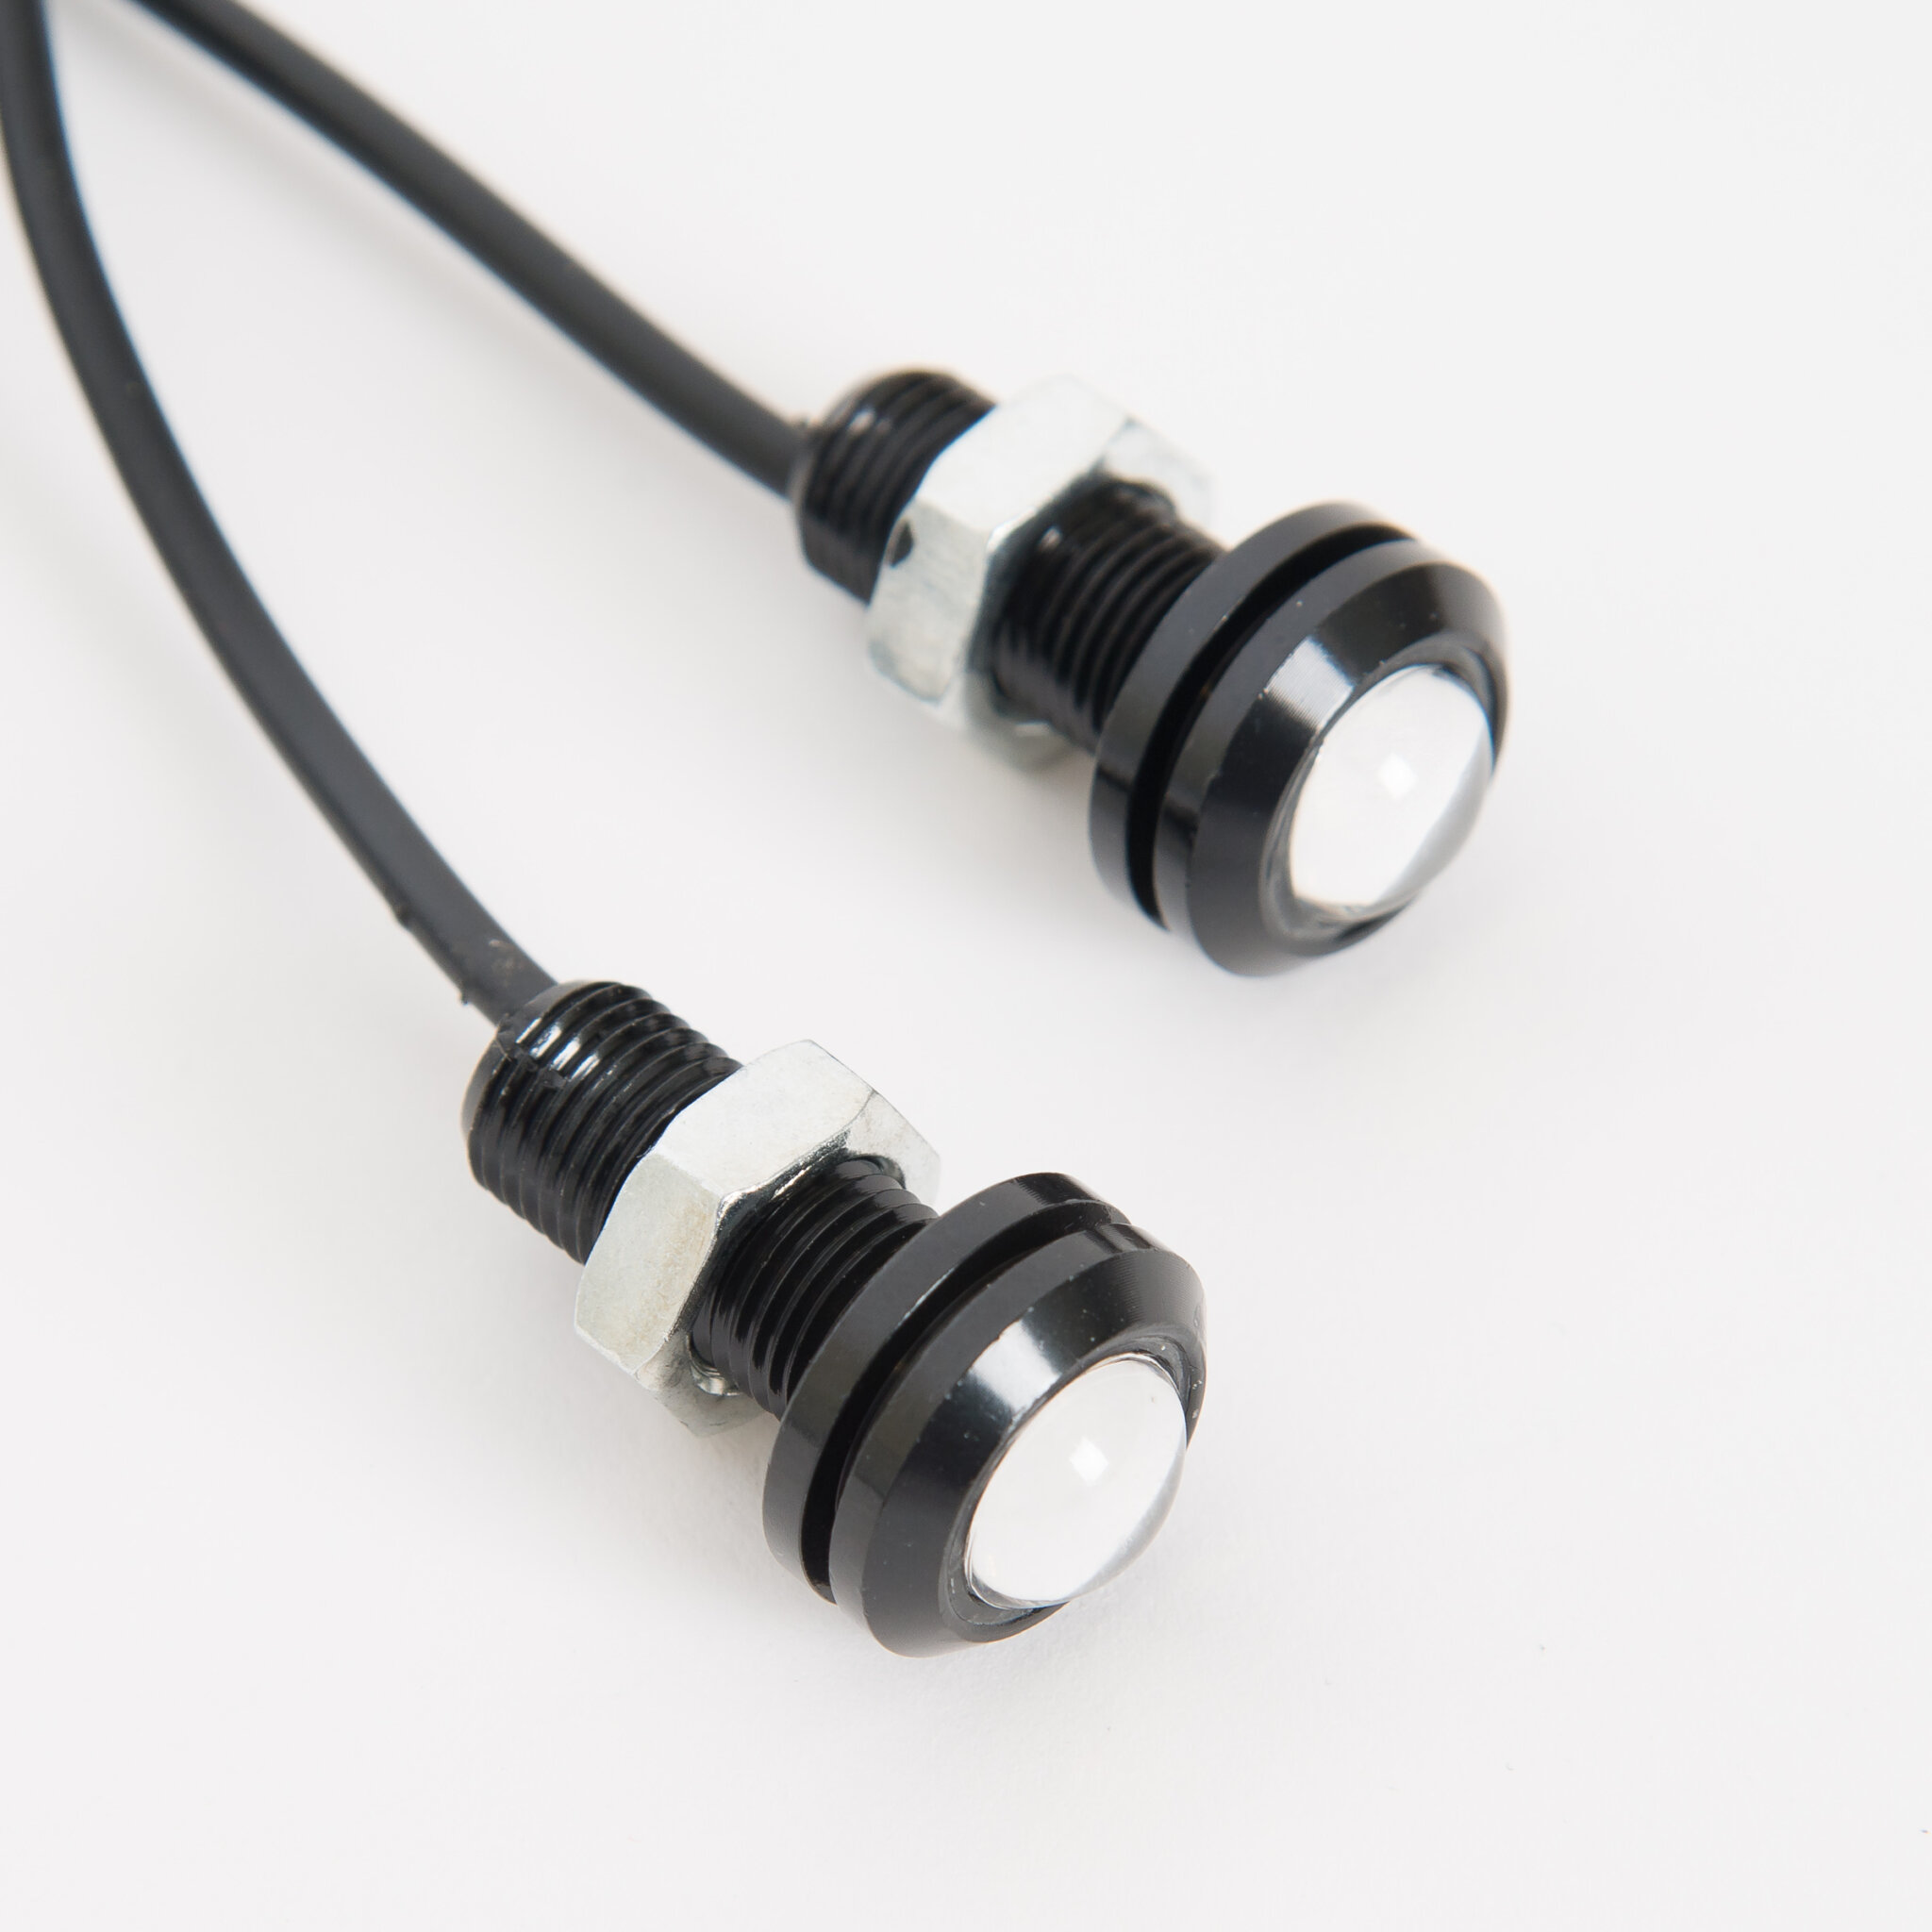 LED Black Micro Mini Tiny Small Indicators Turn Signals Motorcycle MotorBike BS4